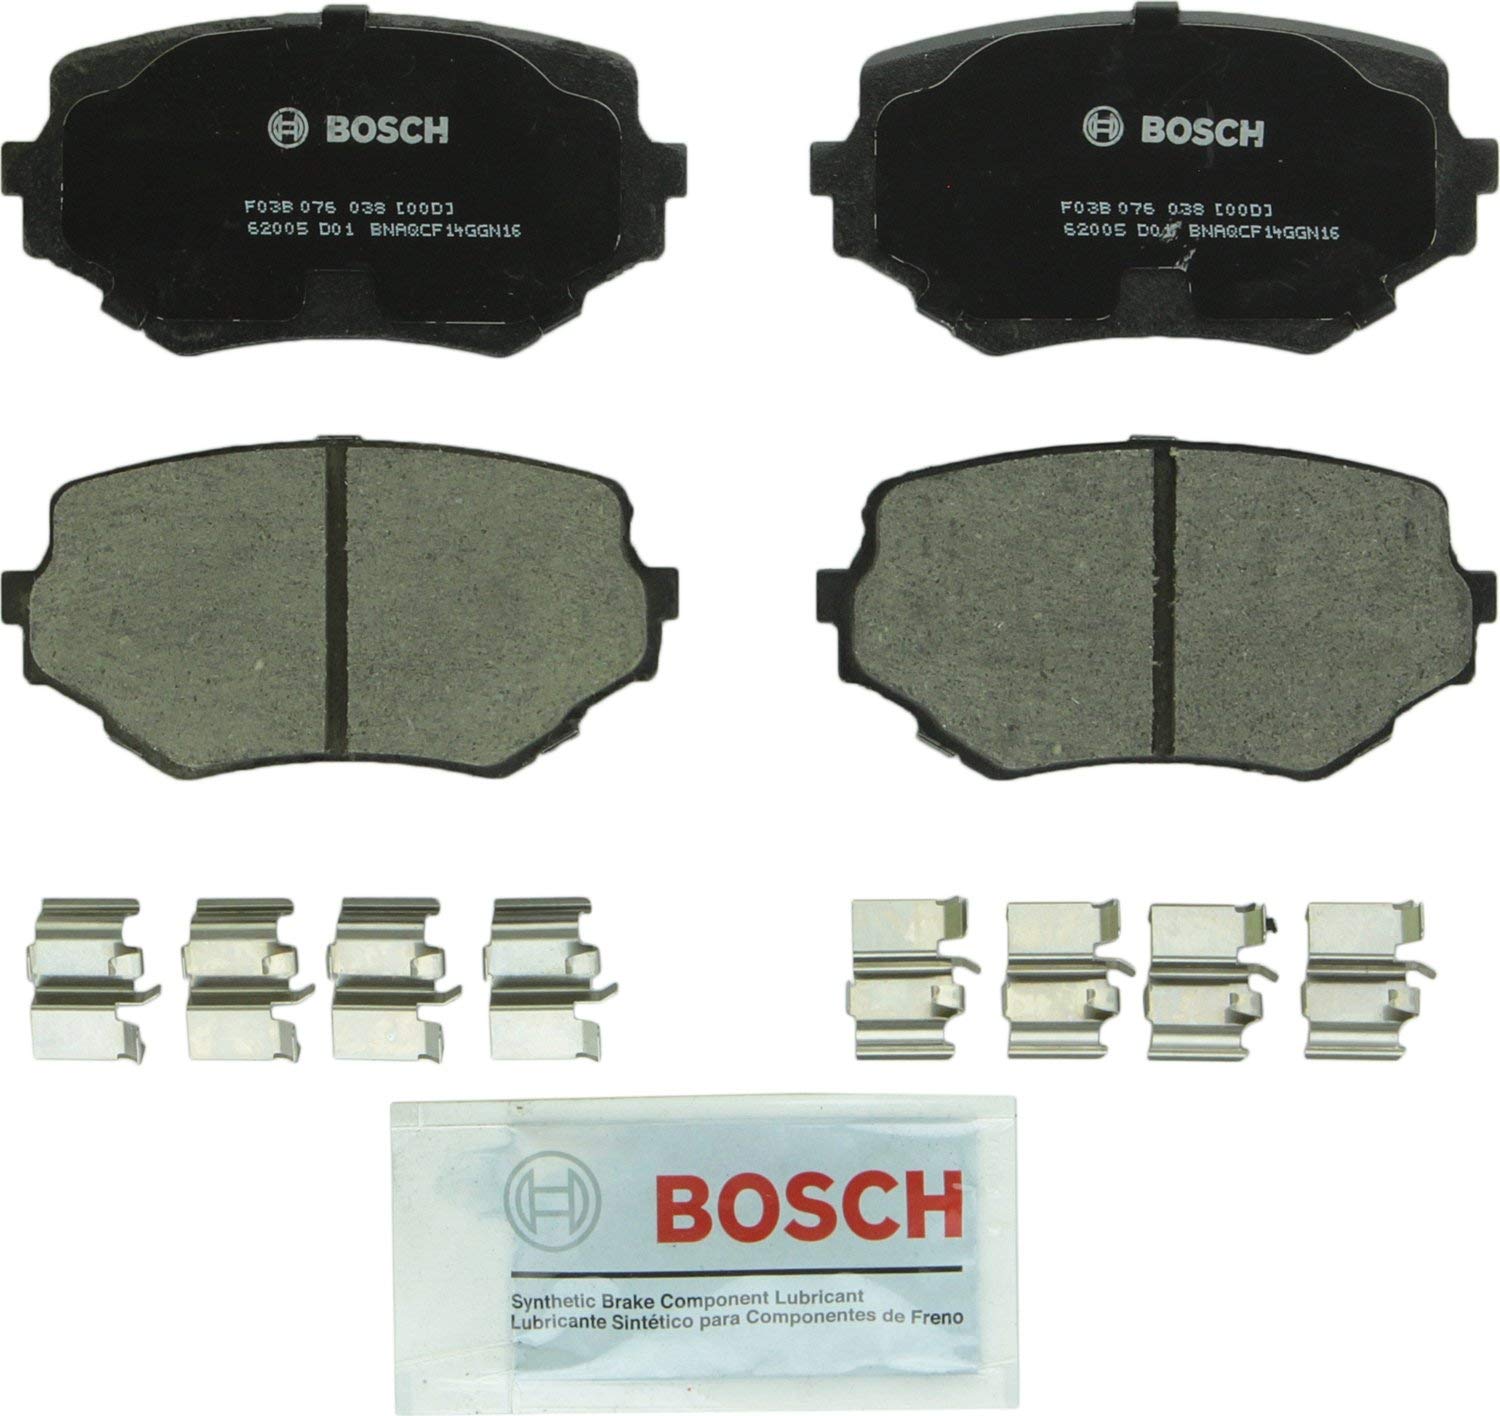 Bosch BC680 QuietCast Premium Ceramic Disc Brake Pad Set For Suzuki: 1999-2005 Grand Vitara, 1996-1998 Sidekick, 2002-2004 XL-7; Front